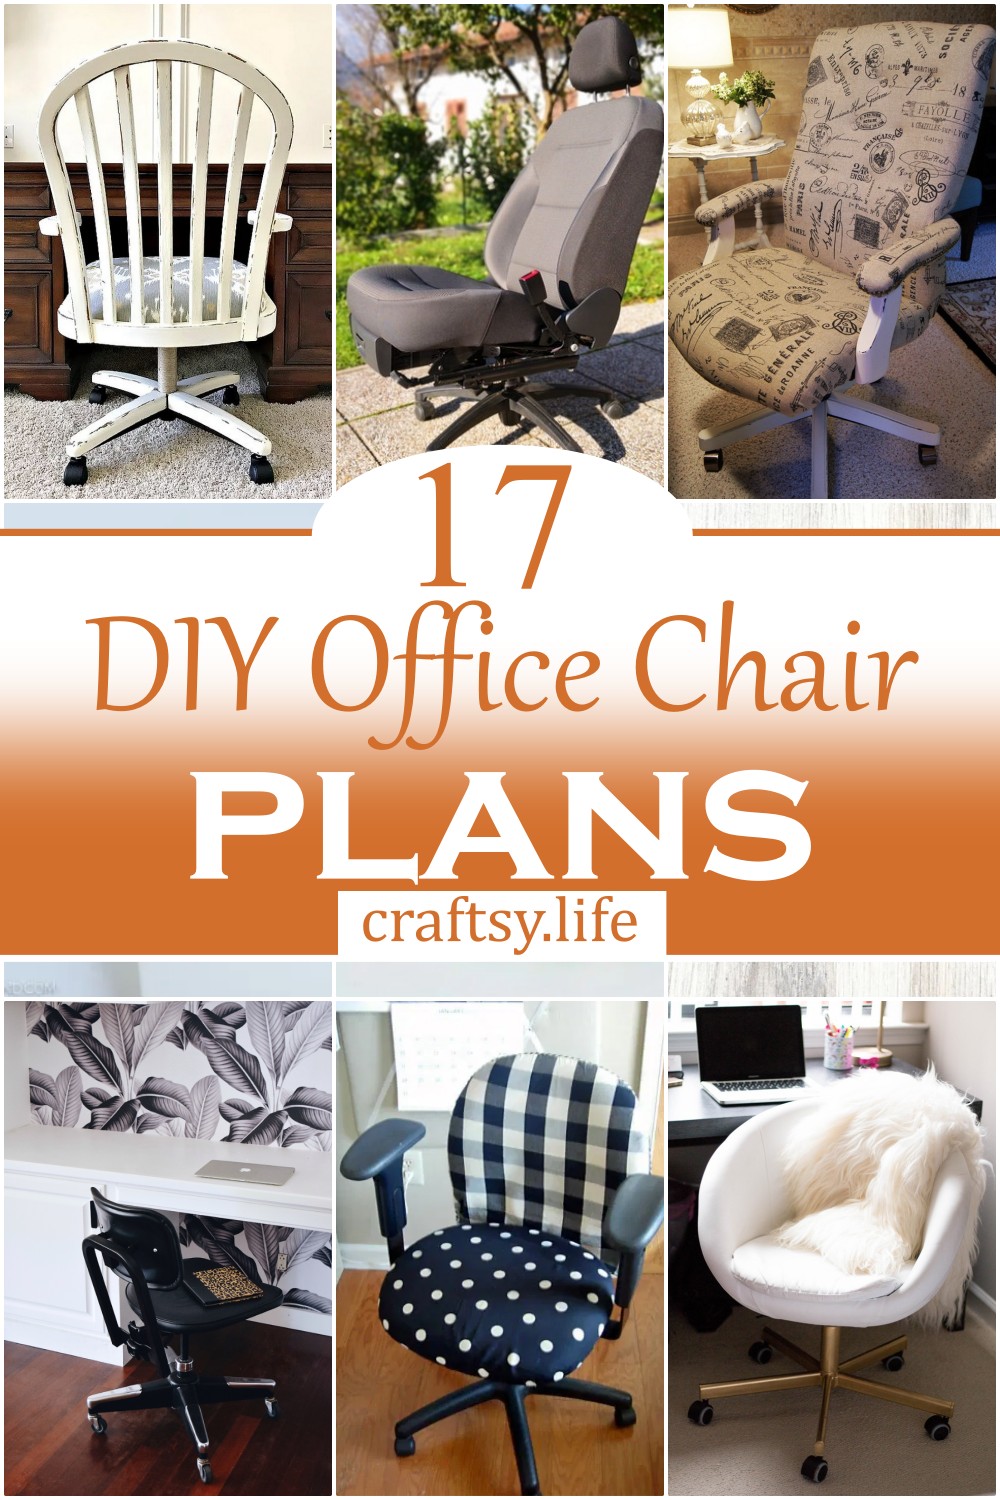 DIY Office Chair plans